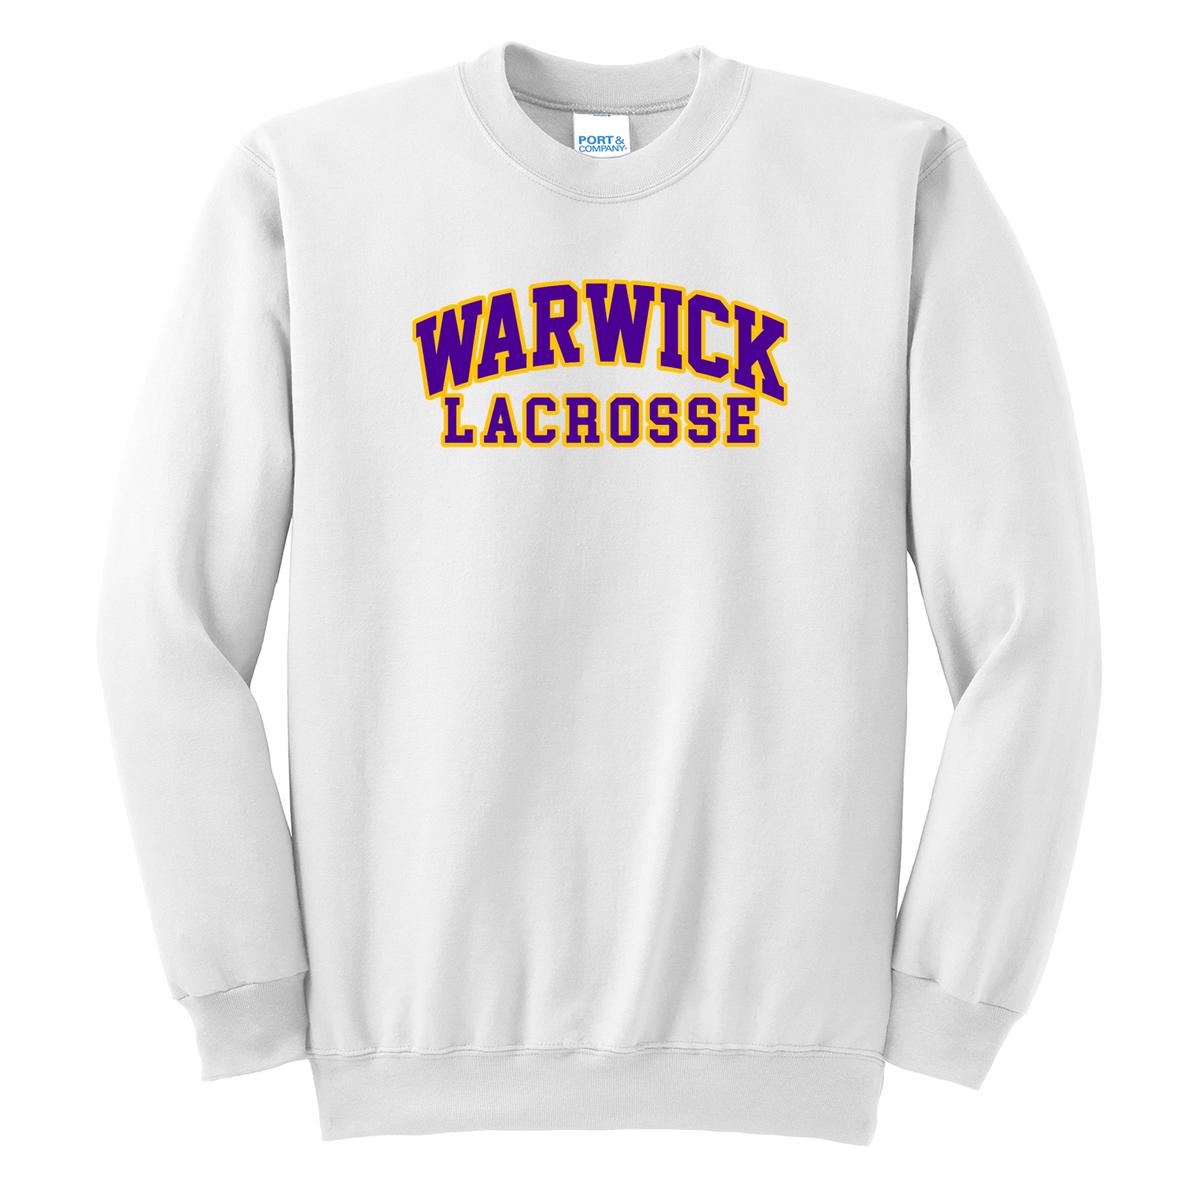 Warwick Lacrosse Crew Neck Sweater